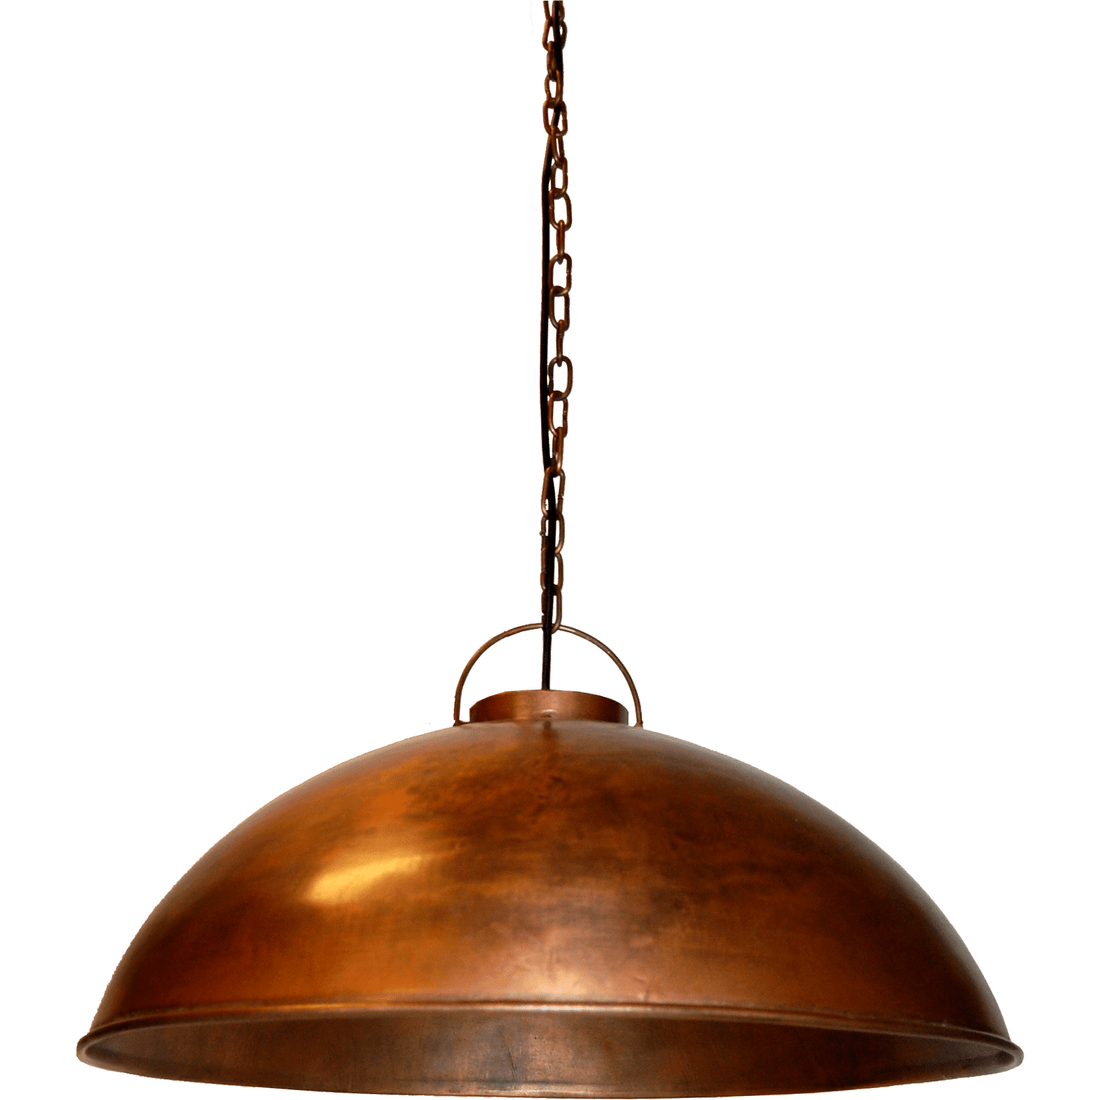 Trademark Living Thormann ceiling lamp - antique copper